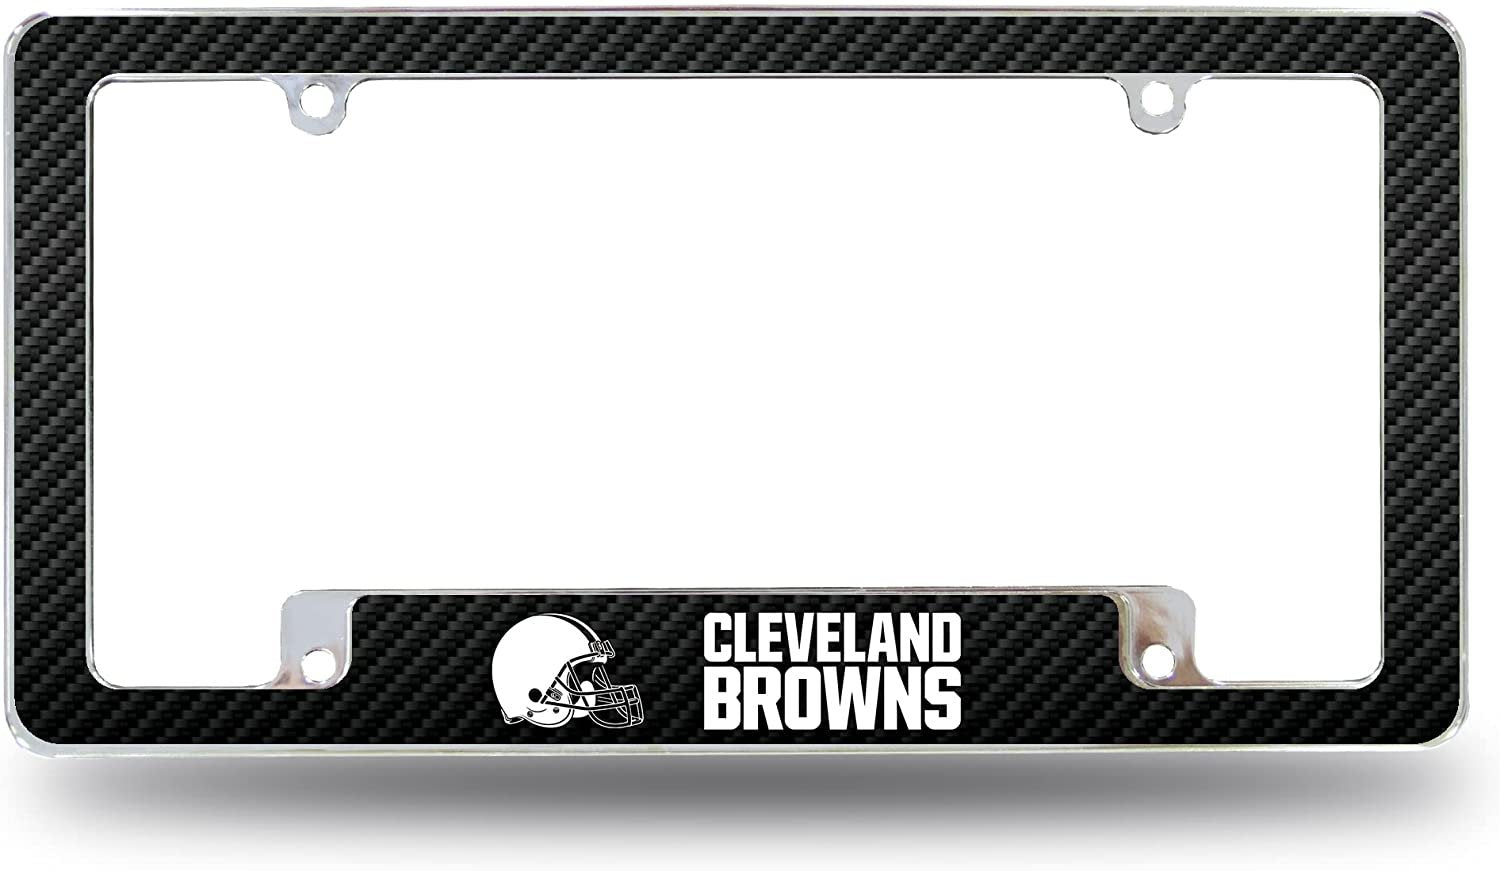 Cleveland Browns Metal License Plate Frame Tag Cover Carbon Fiber Design 12x6 Inch